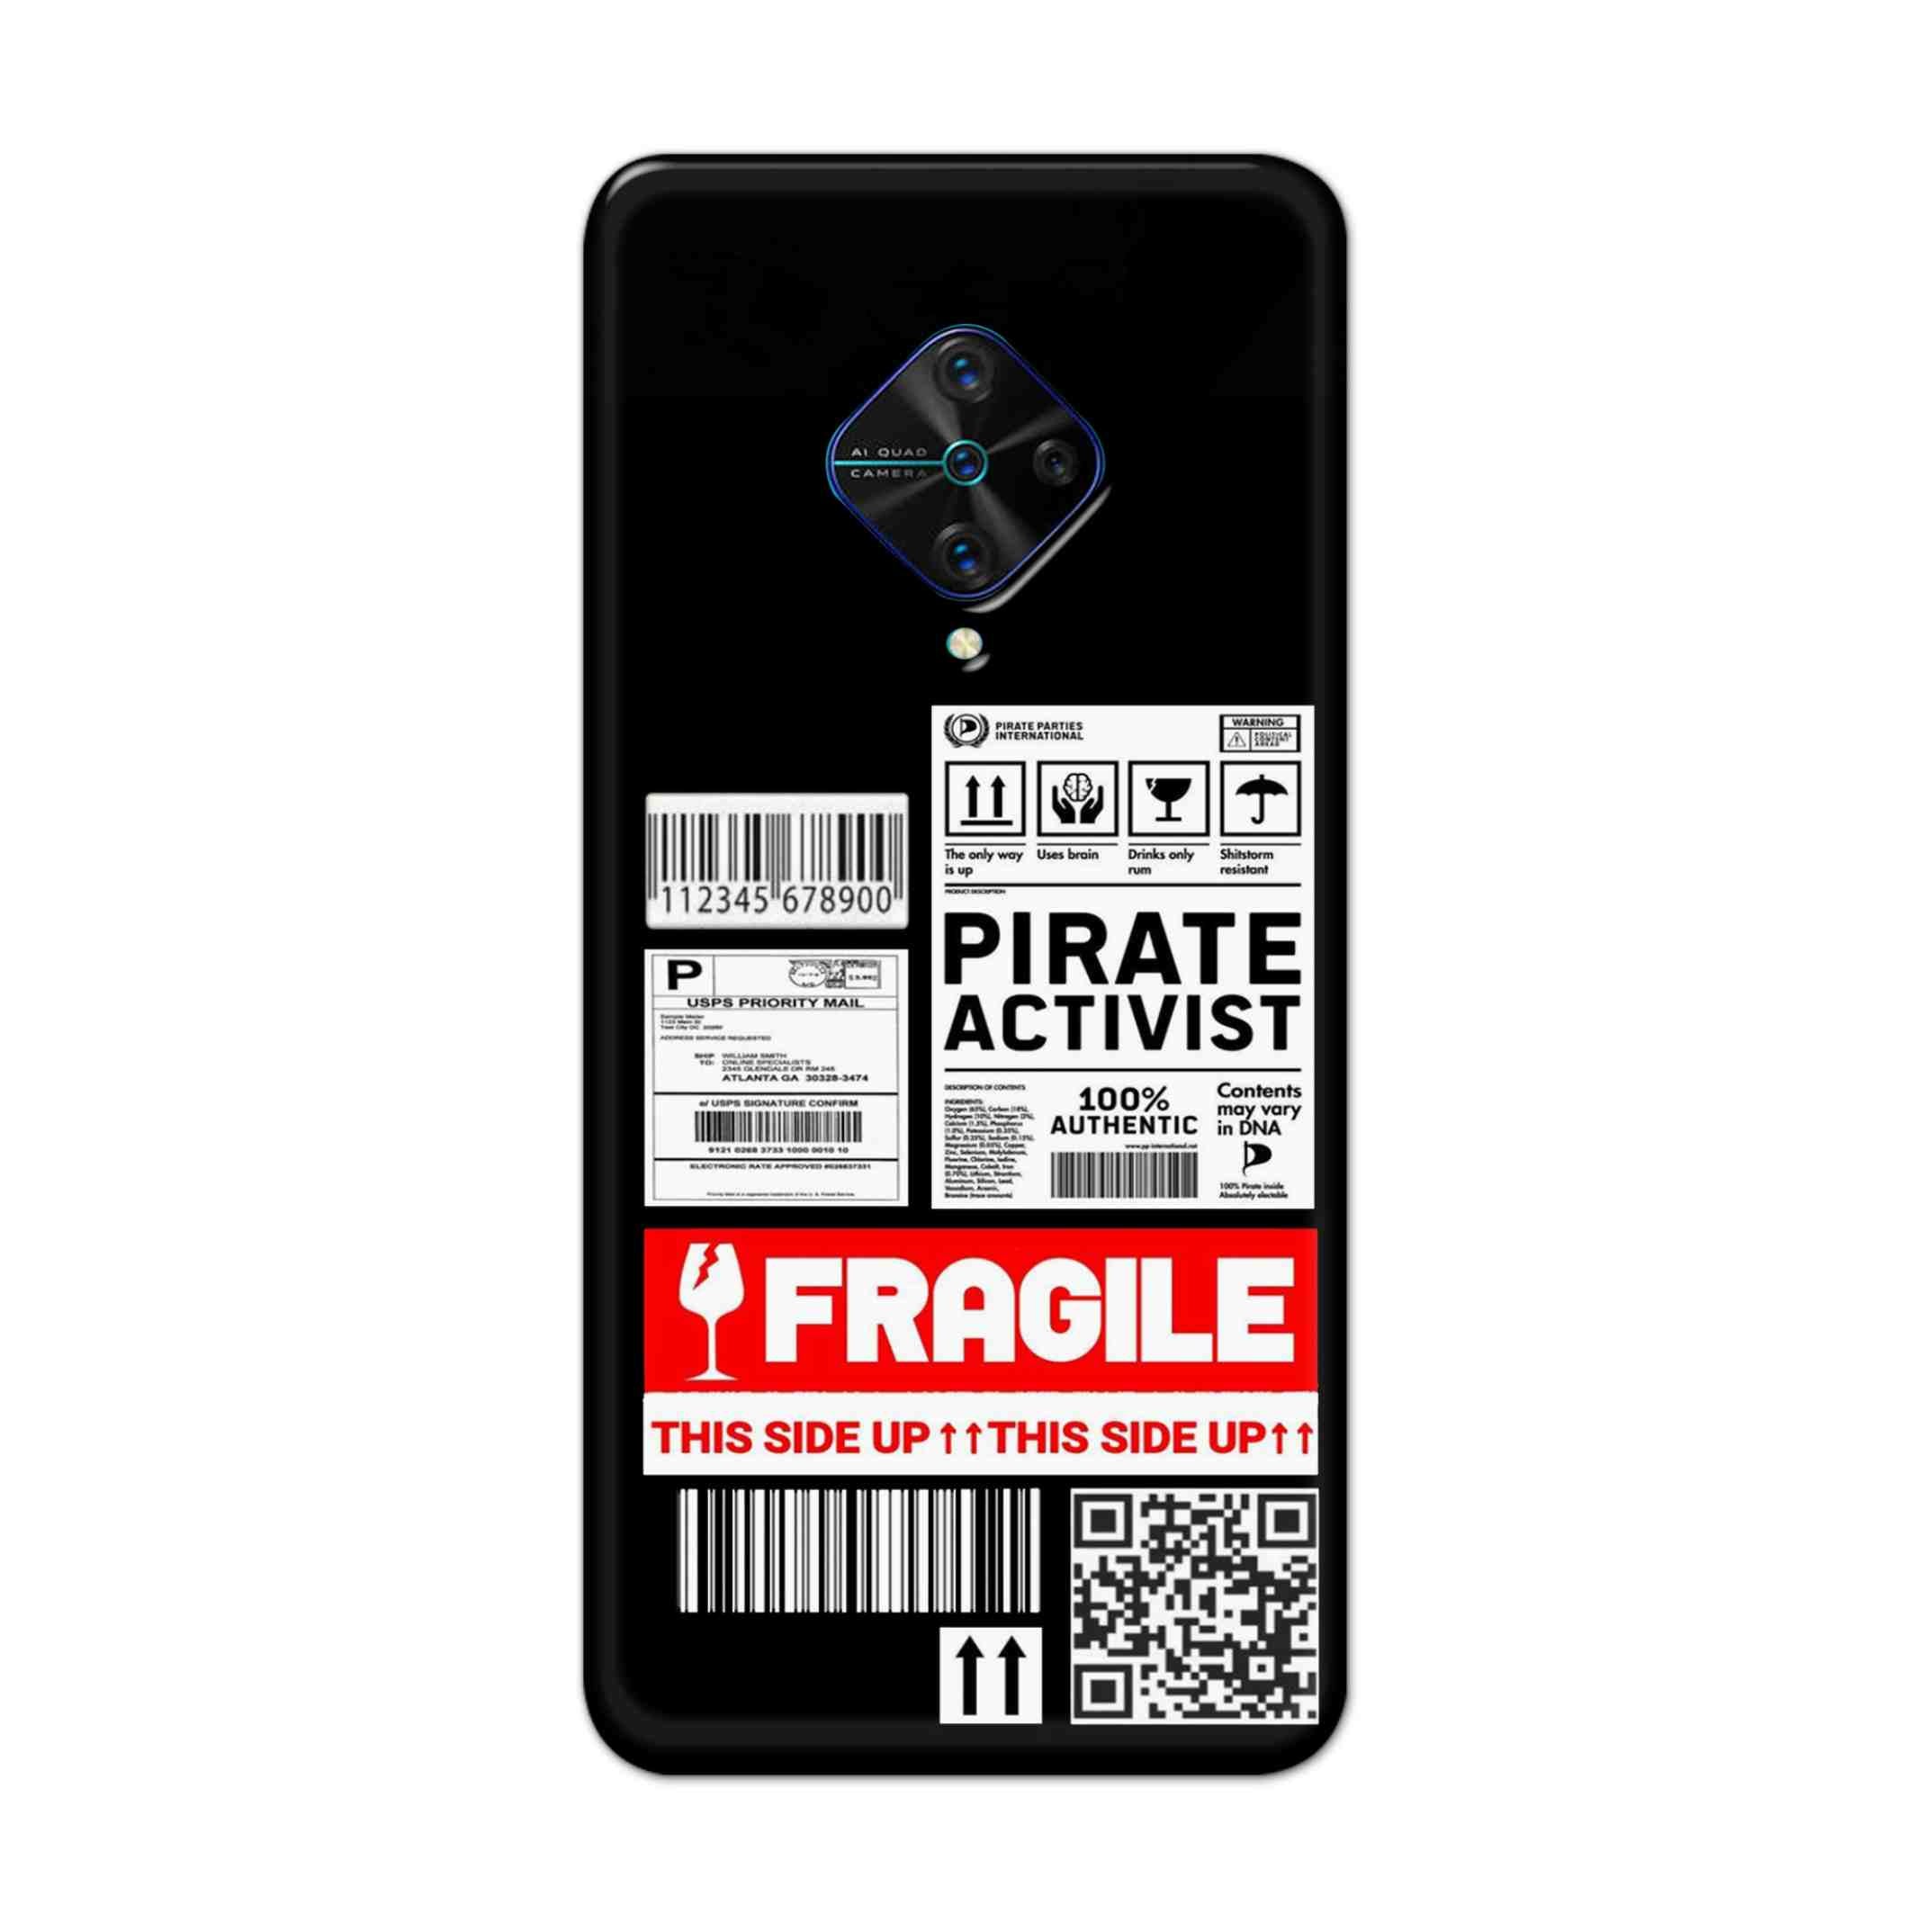 Buy Fragile Hard Back Mobile Phone Case Cover For Vivo S1 Pro Online